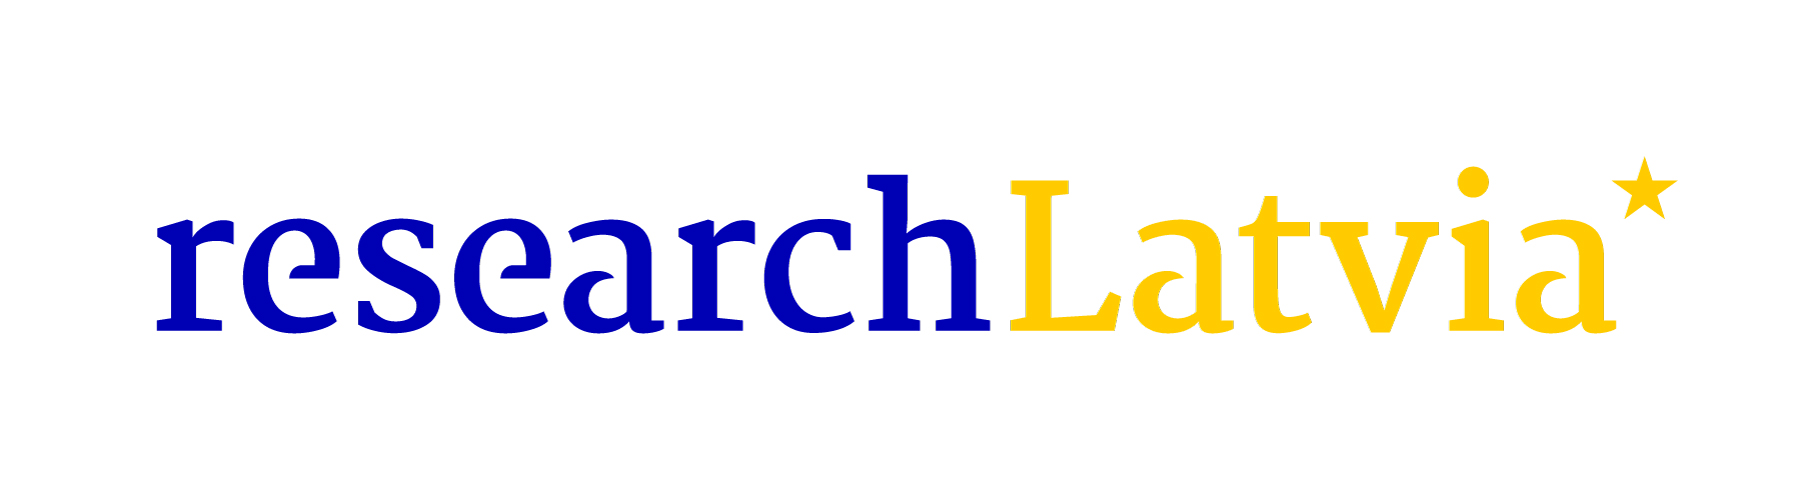 researchlatvia-logo-1800px.jpg